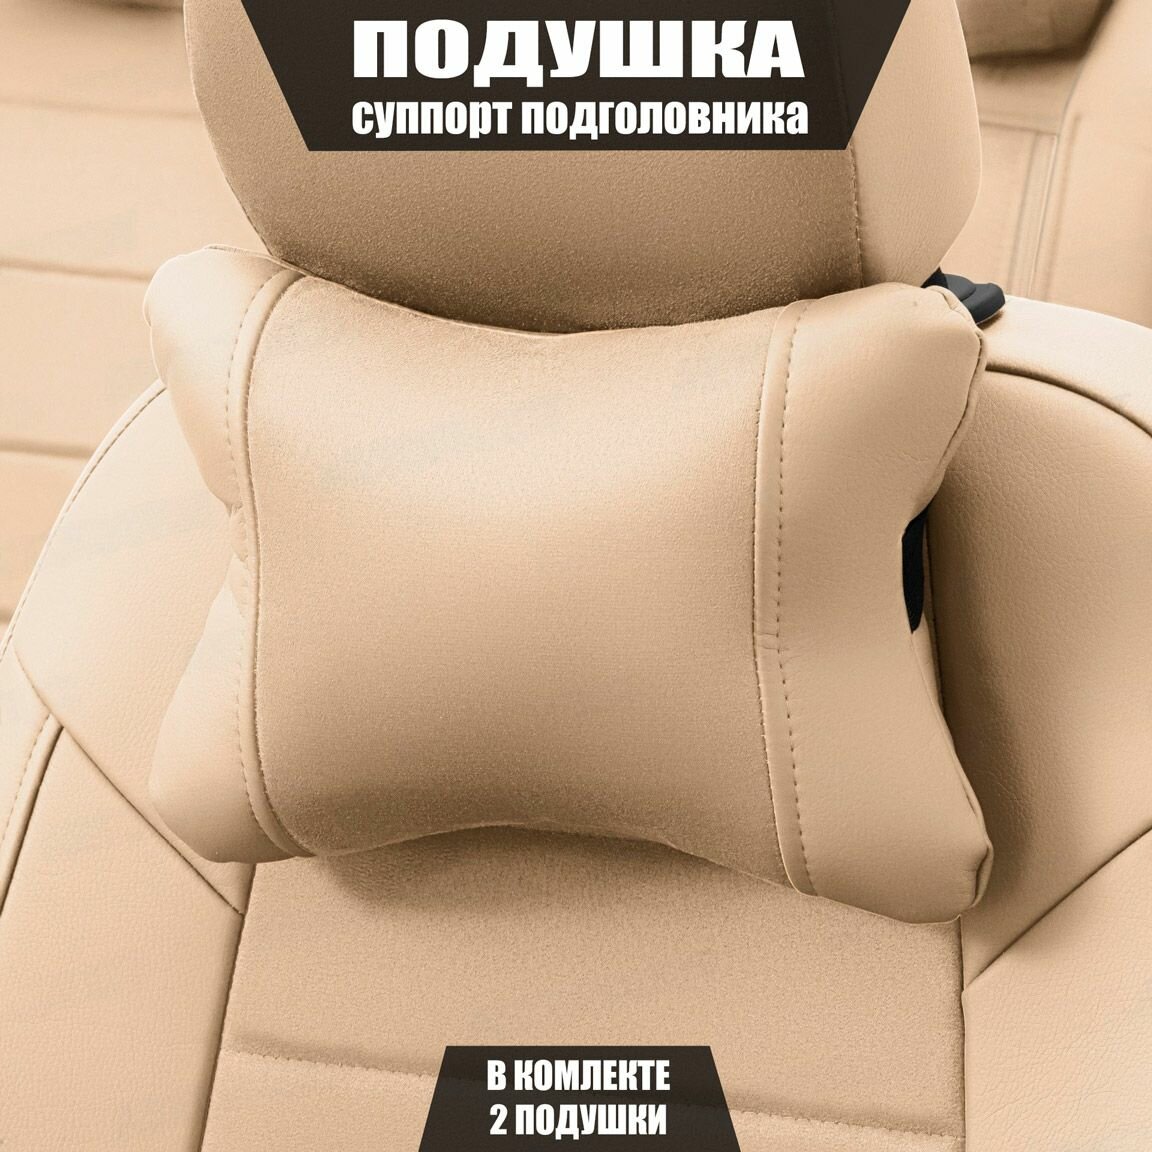 Подушки под шею (суппорт подголовника) для Сузуки Гранд Витара (2012 - 2016) внедорожник 5 дверей / Suzuki Grand Vitara, Алькантара, 2 подушки, Бежевый